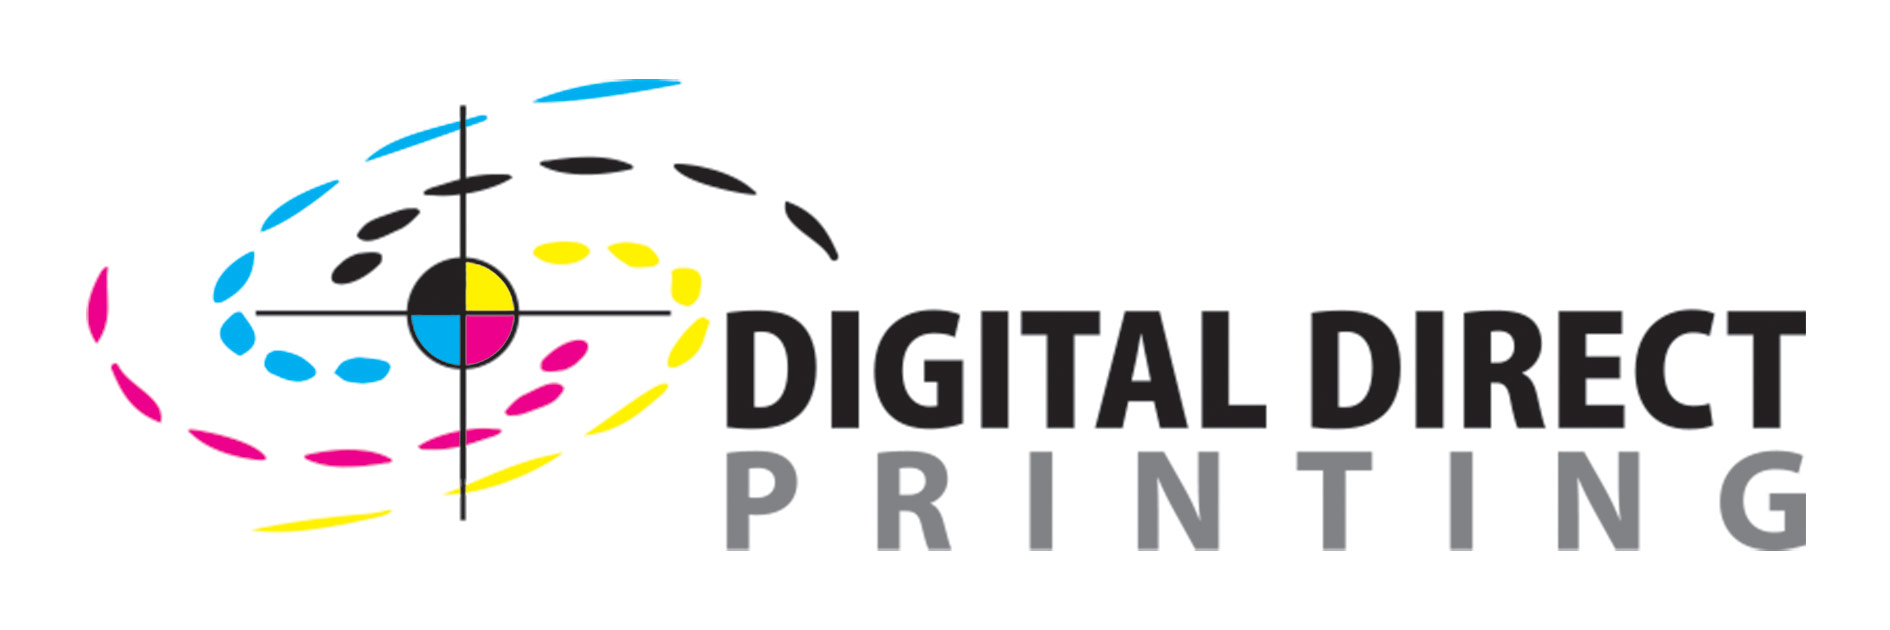 (c) Digitaldirectprinting.com